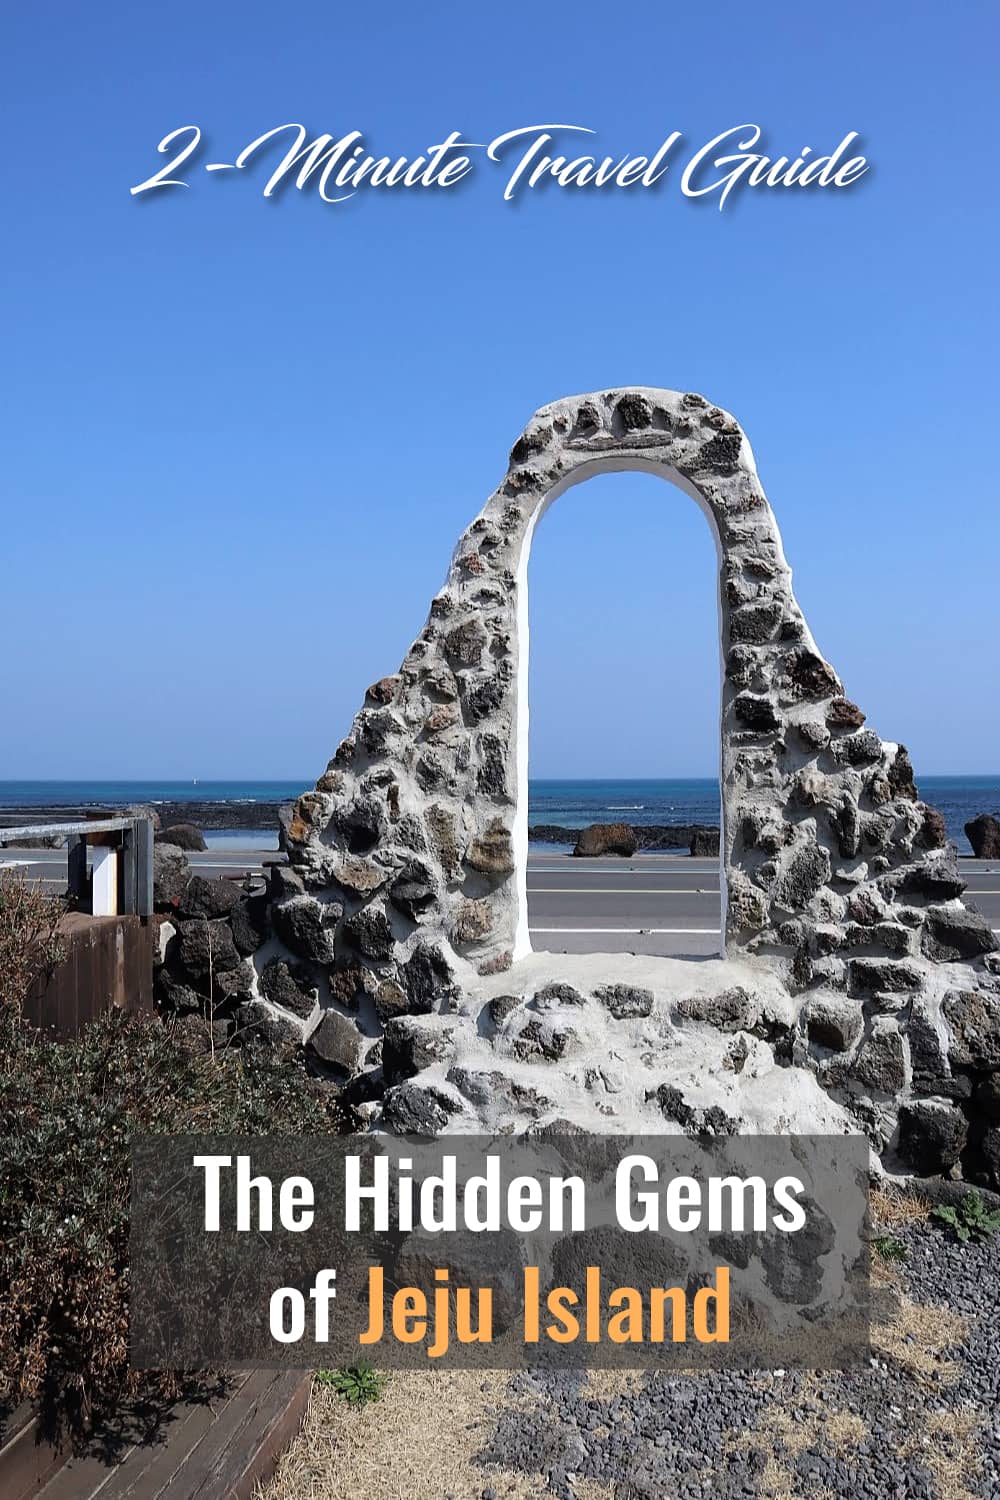 Lingua Asia 2-Minute Travel Guide The Hidden Gems of Jeju Island